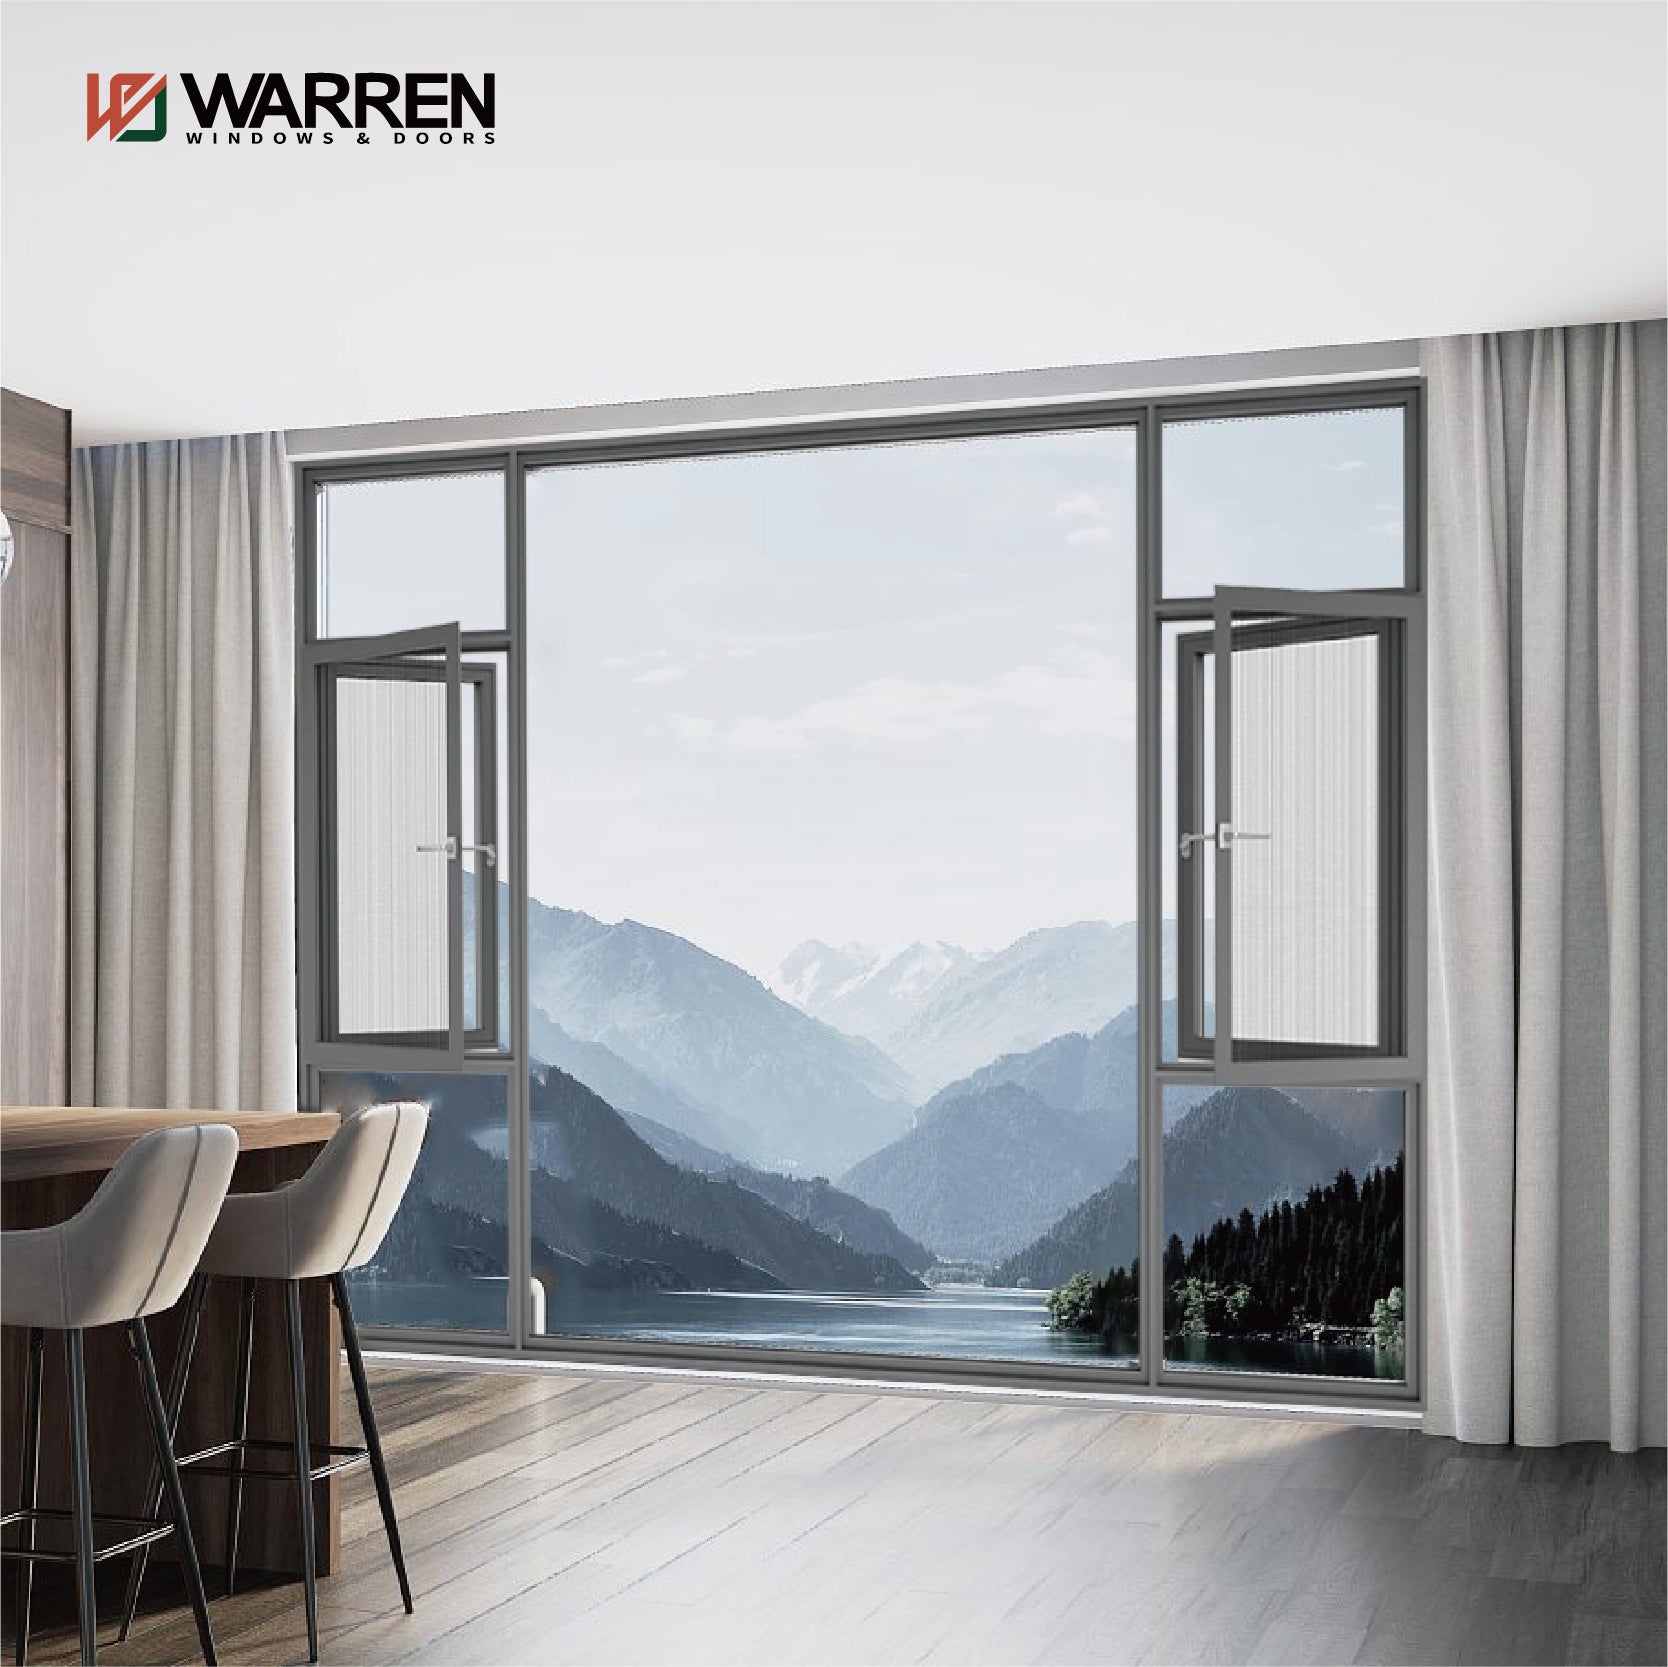 Warren 40x48 window hurricane impact security casement/picture window with full tempered glass